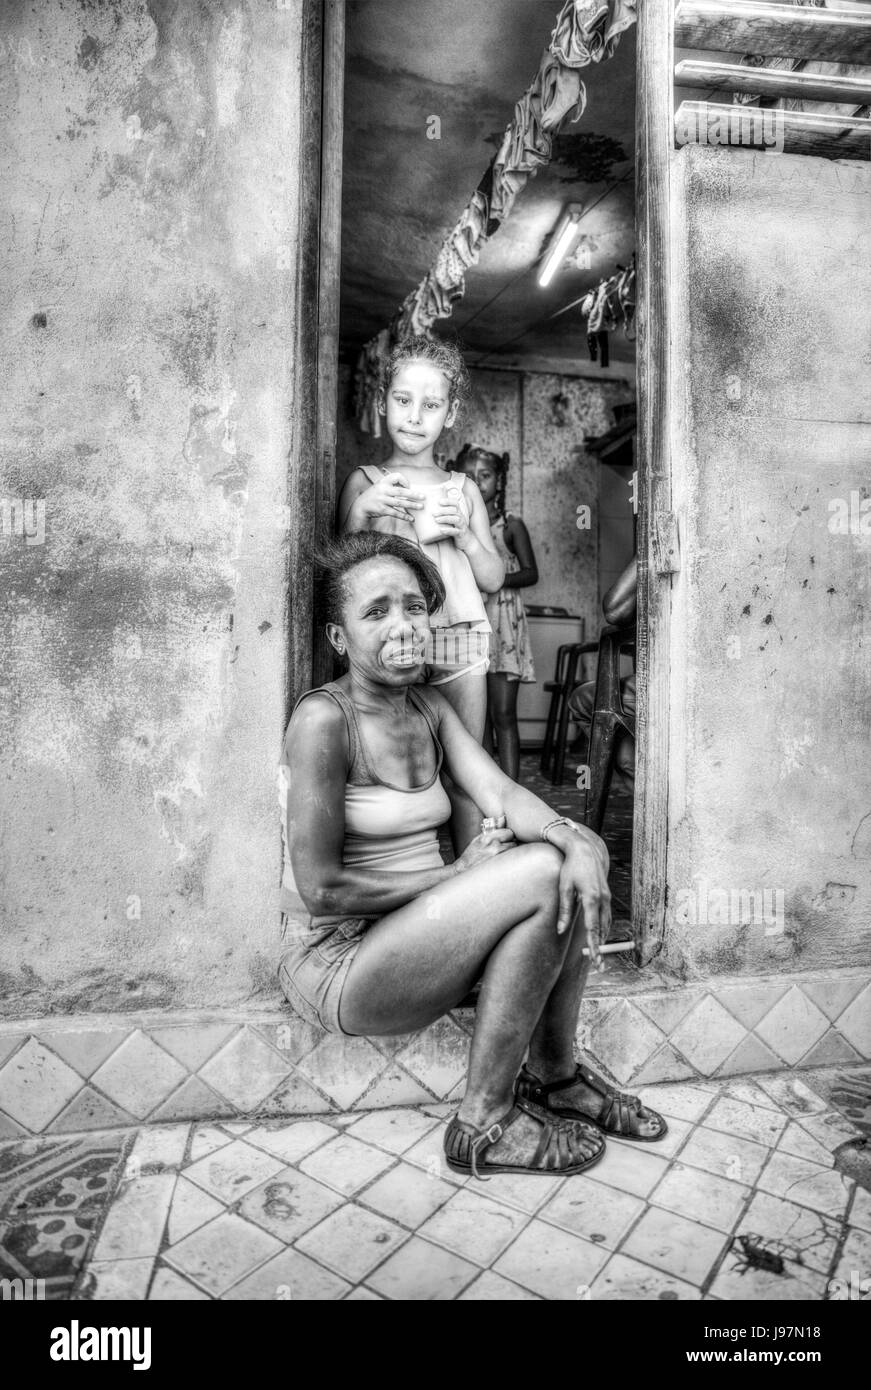 Kubanische Familie, Havanna, Kinder Sat auf Tür, armen Familie, Armut in Kuba, kubanische Armut im Hause, arme Familien, Kuba, Havanna, Karibik Familie Stockfoto